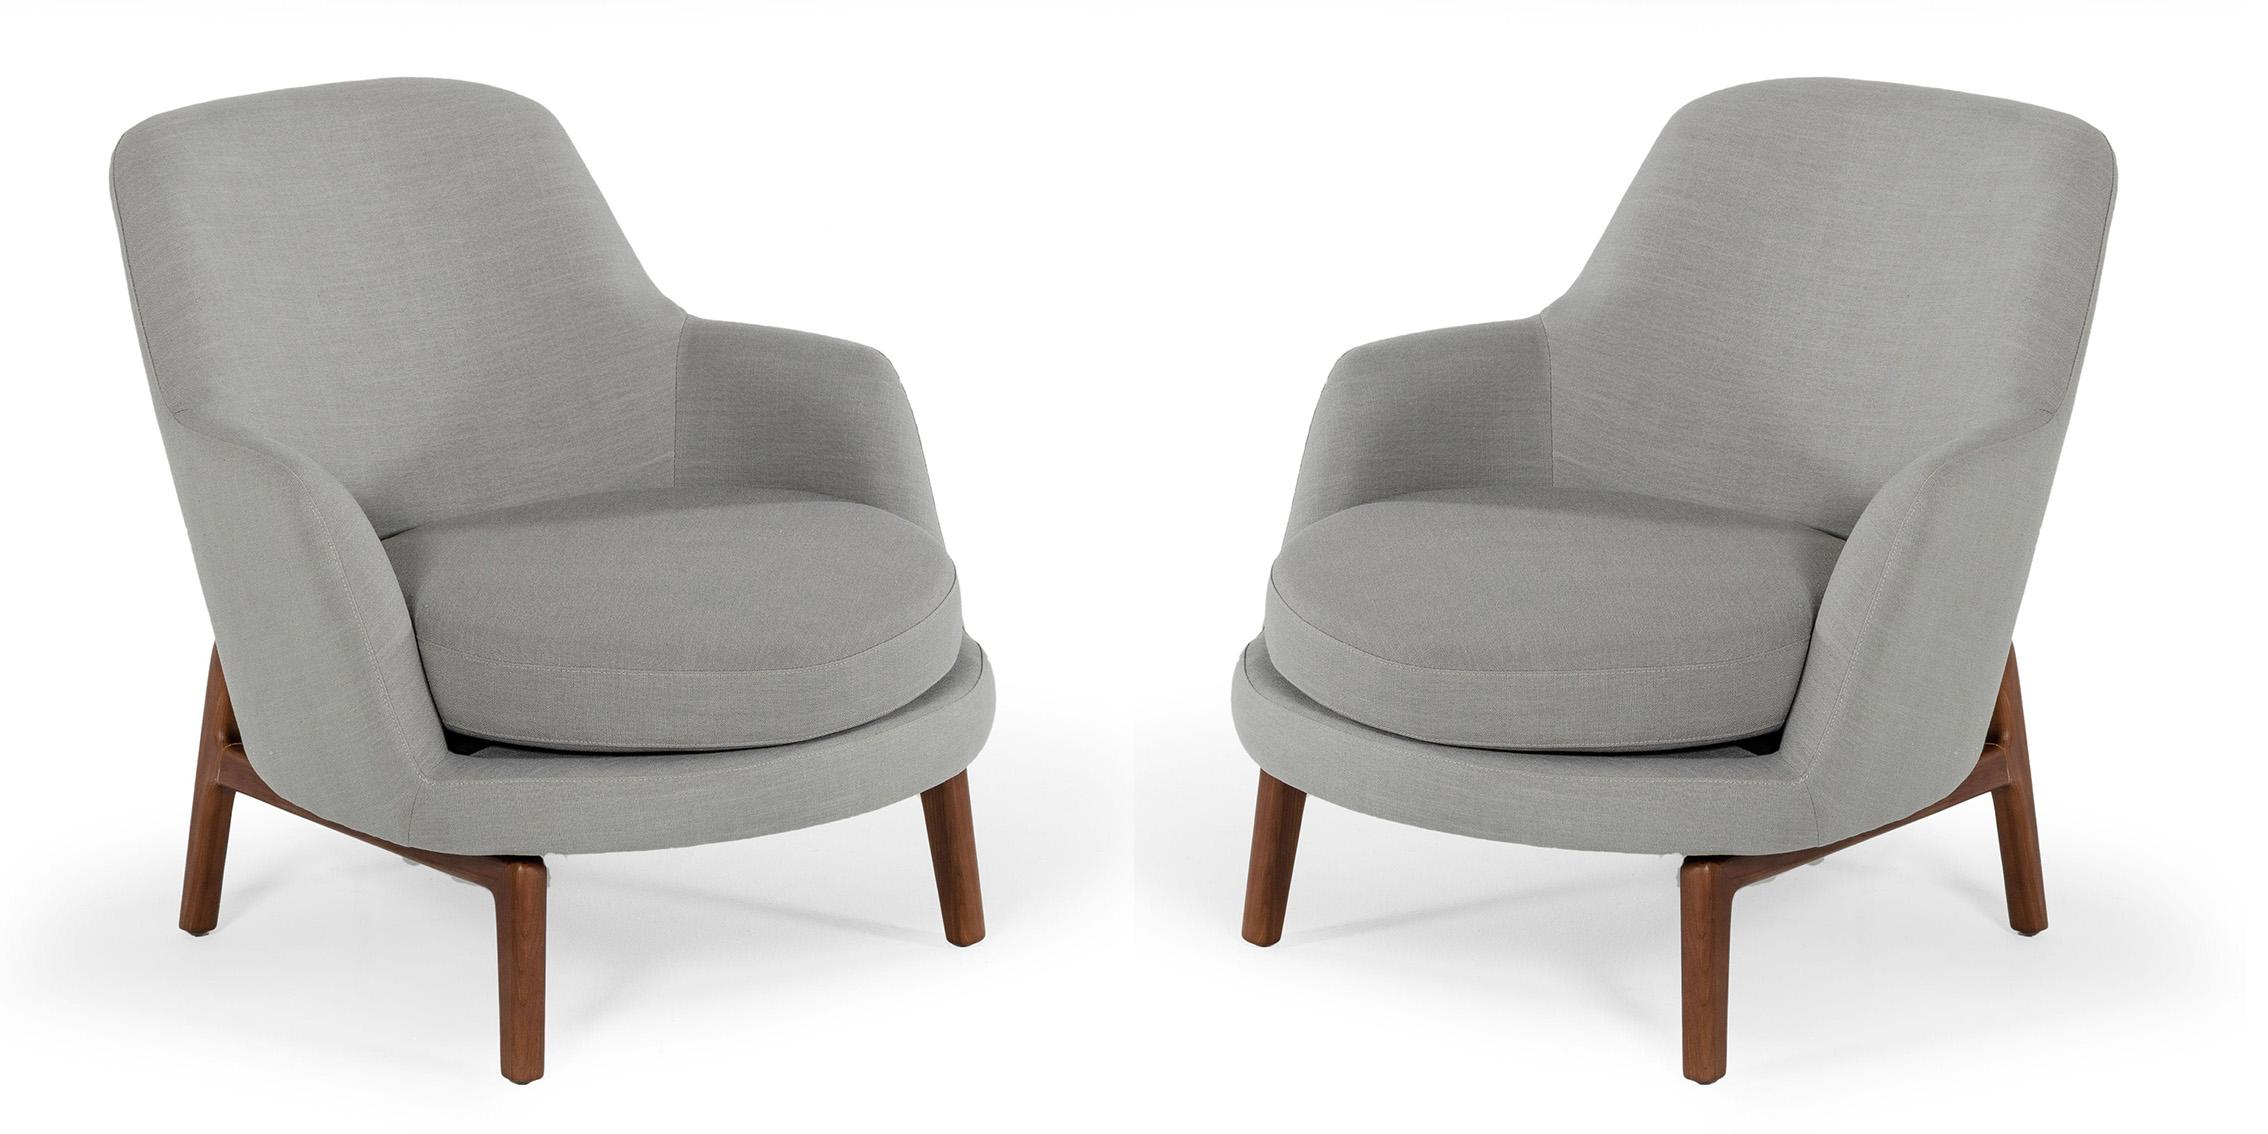 Contemporary, Modern Arm Chair Set VGUIMY465-GREY-Set-2 VGUIMY465-GREY-Set-2 in Gray Linen